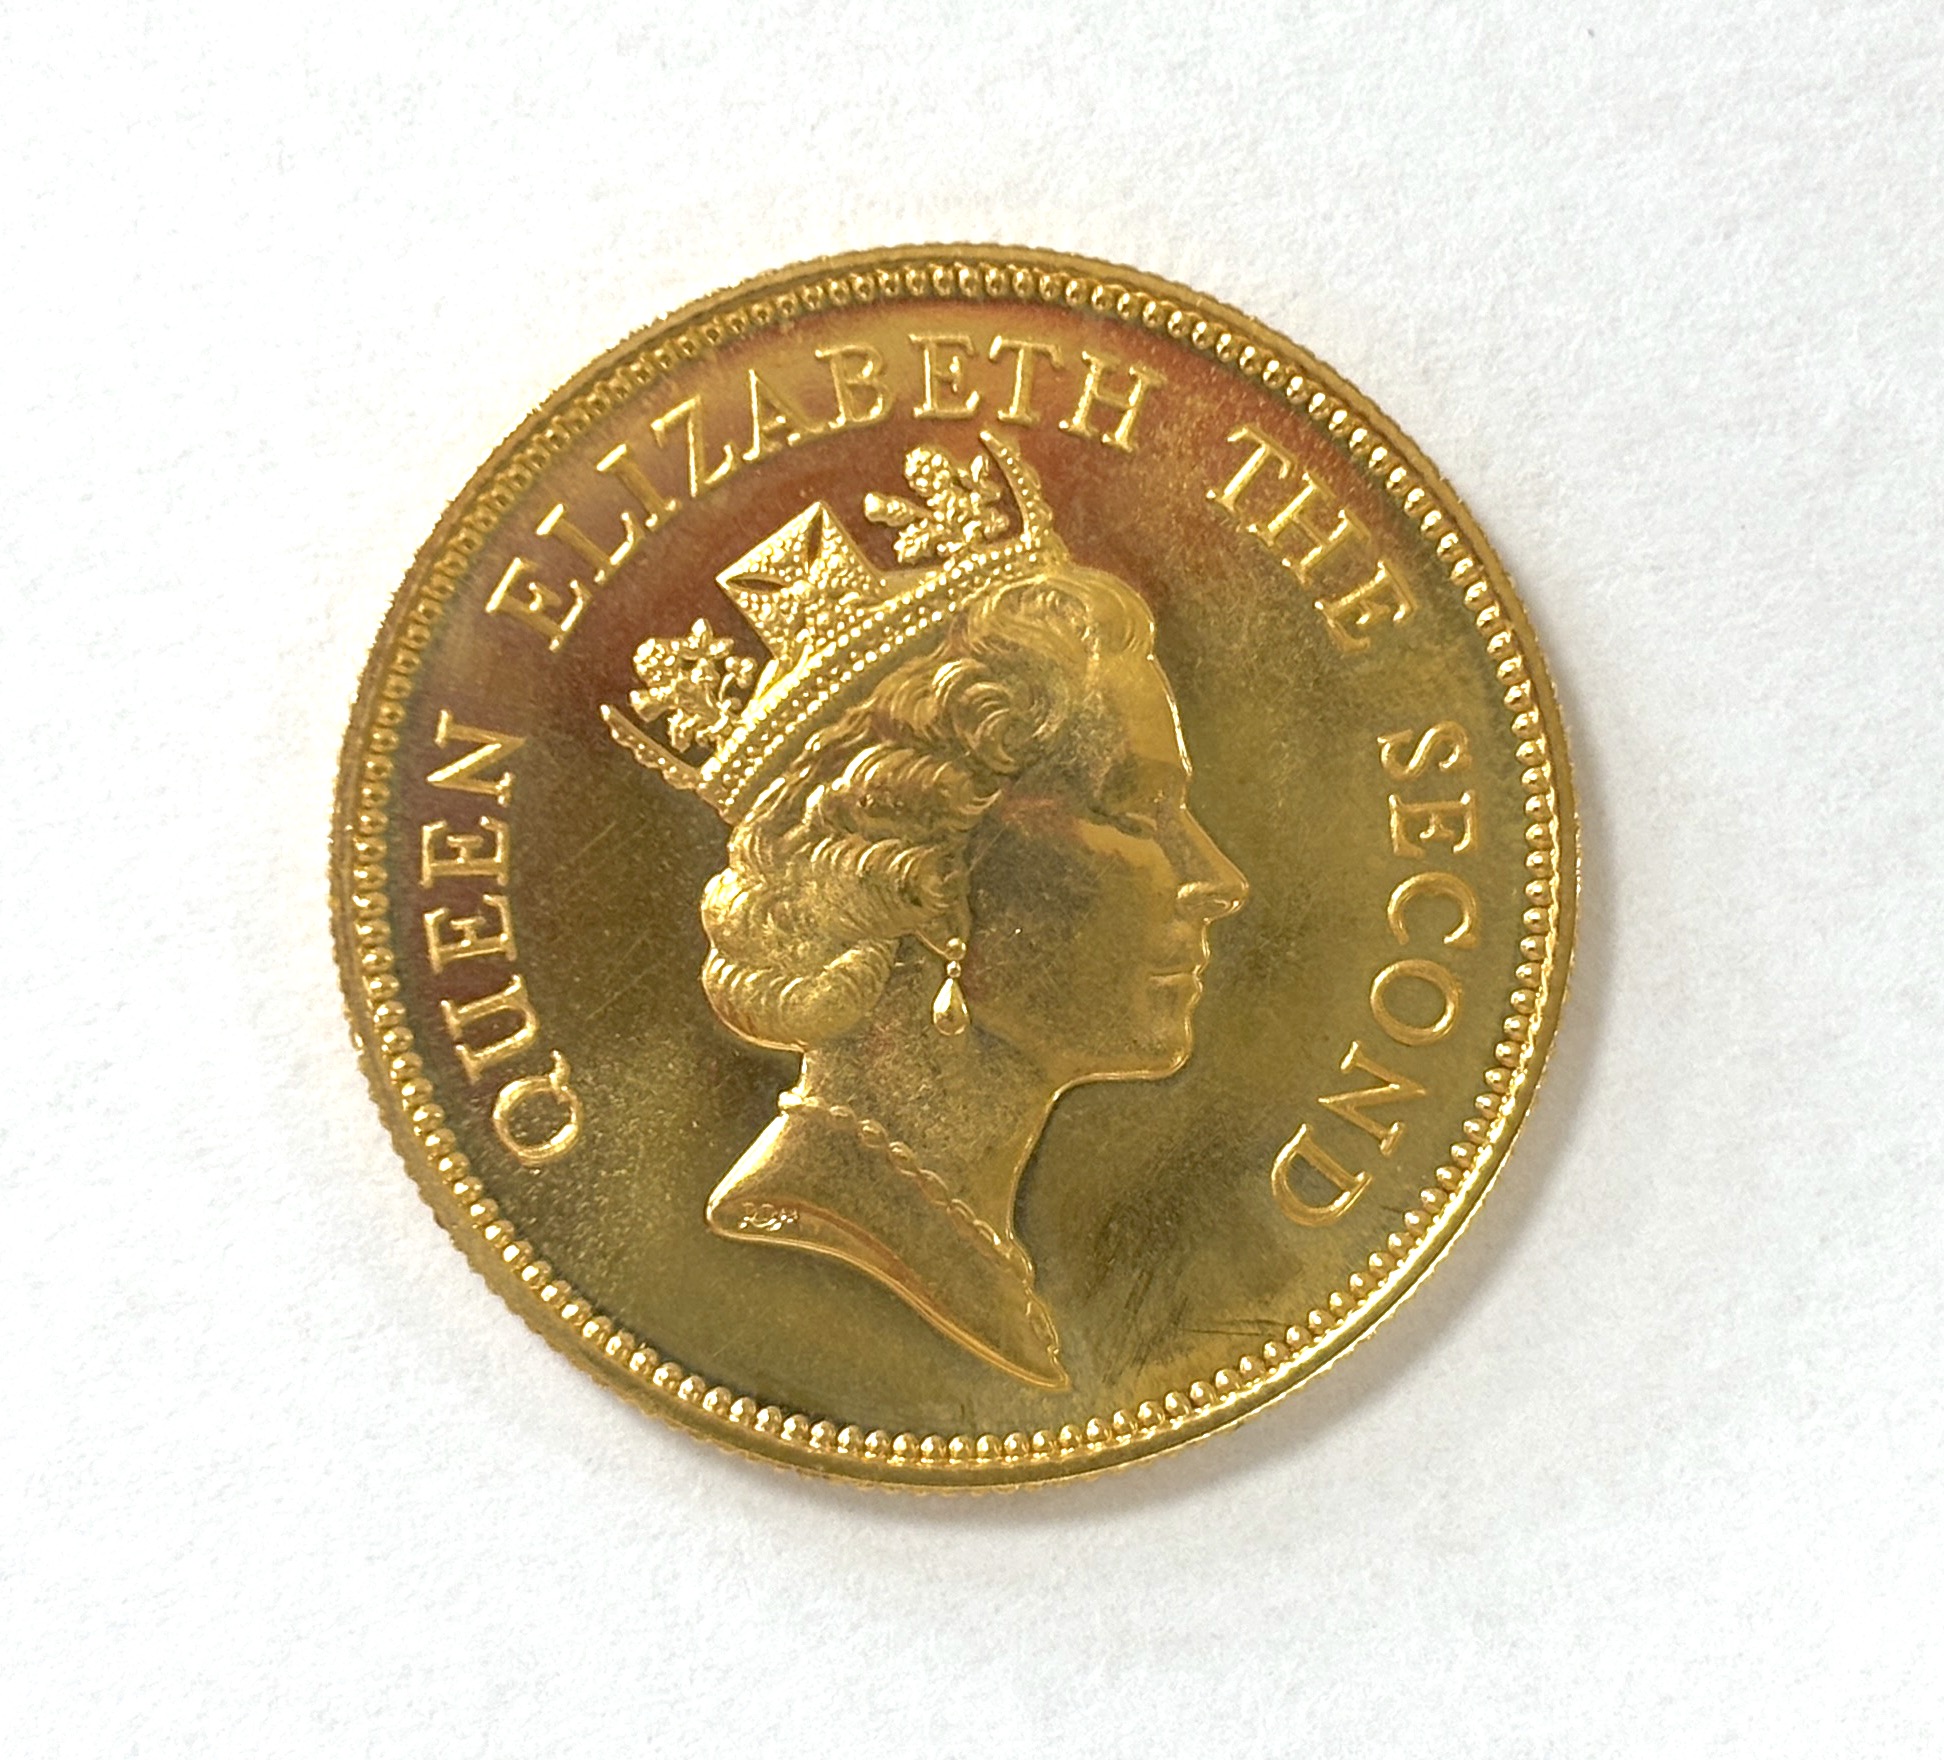 Gold coins, Hong Kong gold 1000 dollars commemorating the Royal visit of QEII, 1986, 15.97 grams, - Image 2 of 3